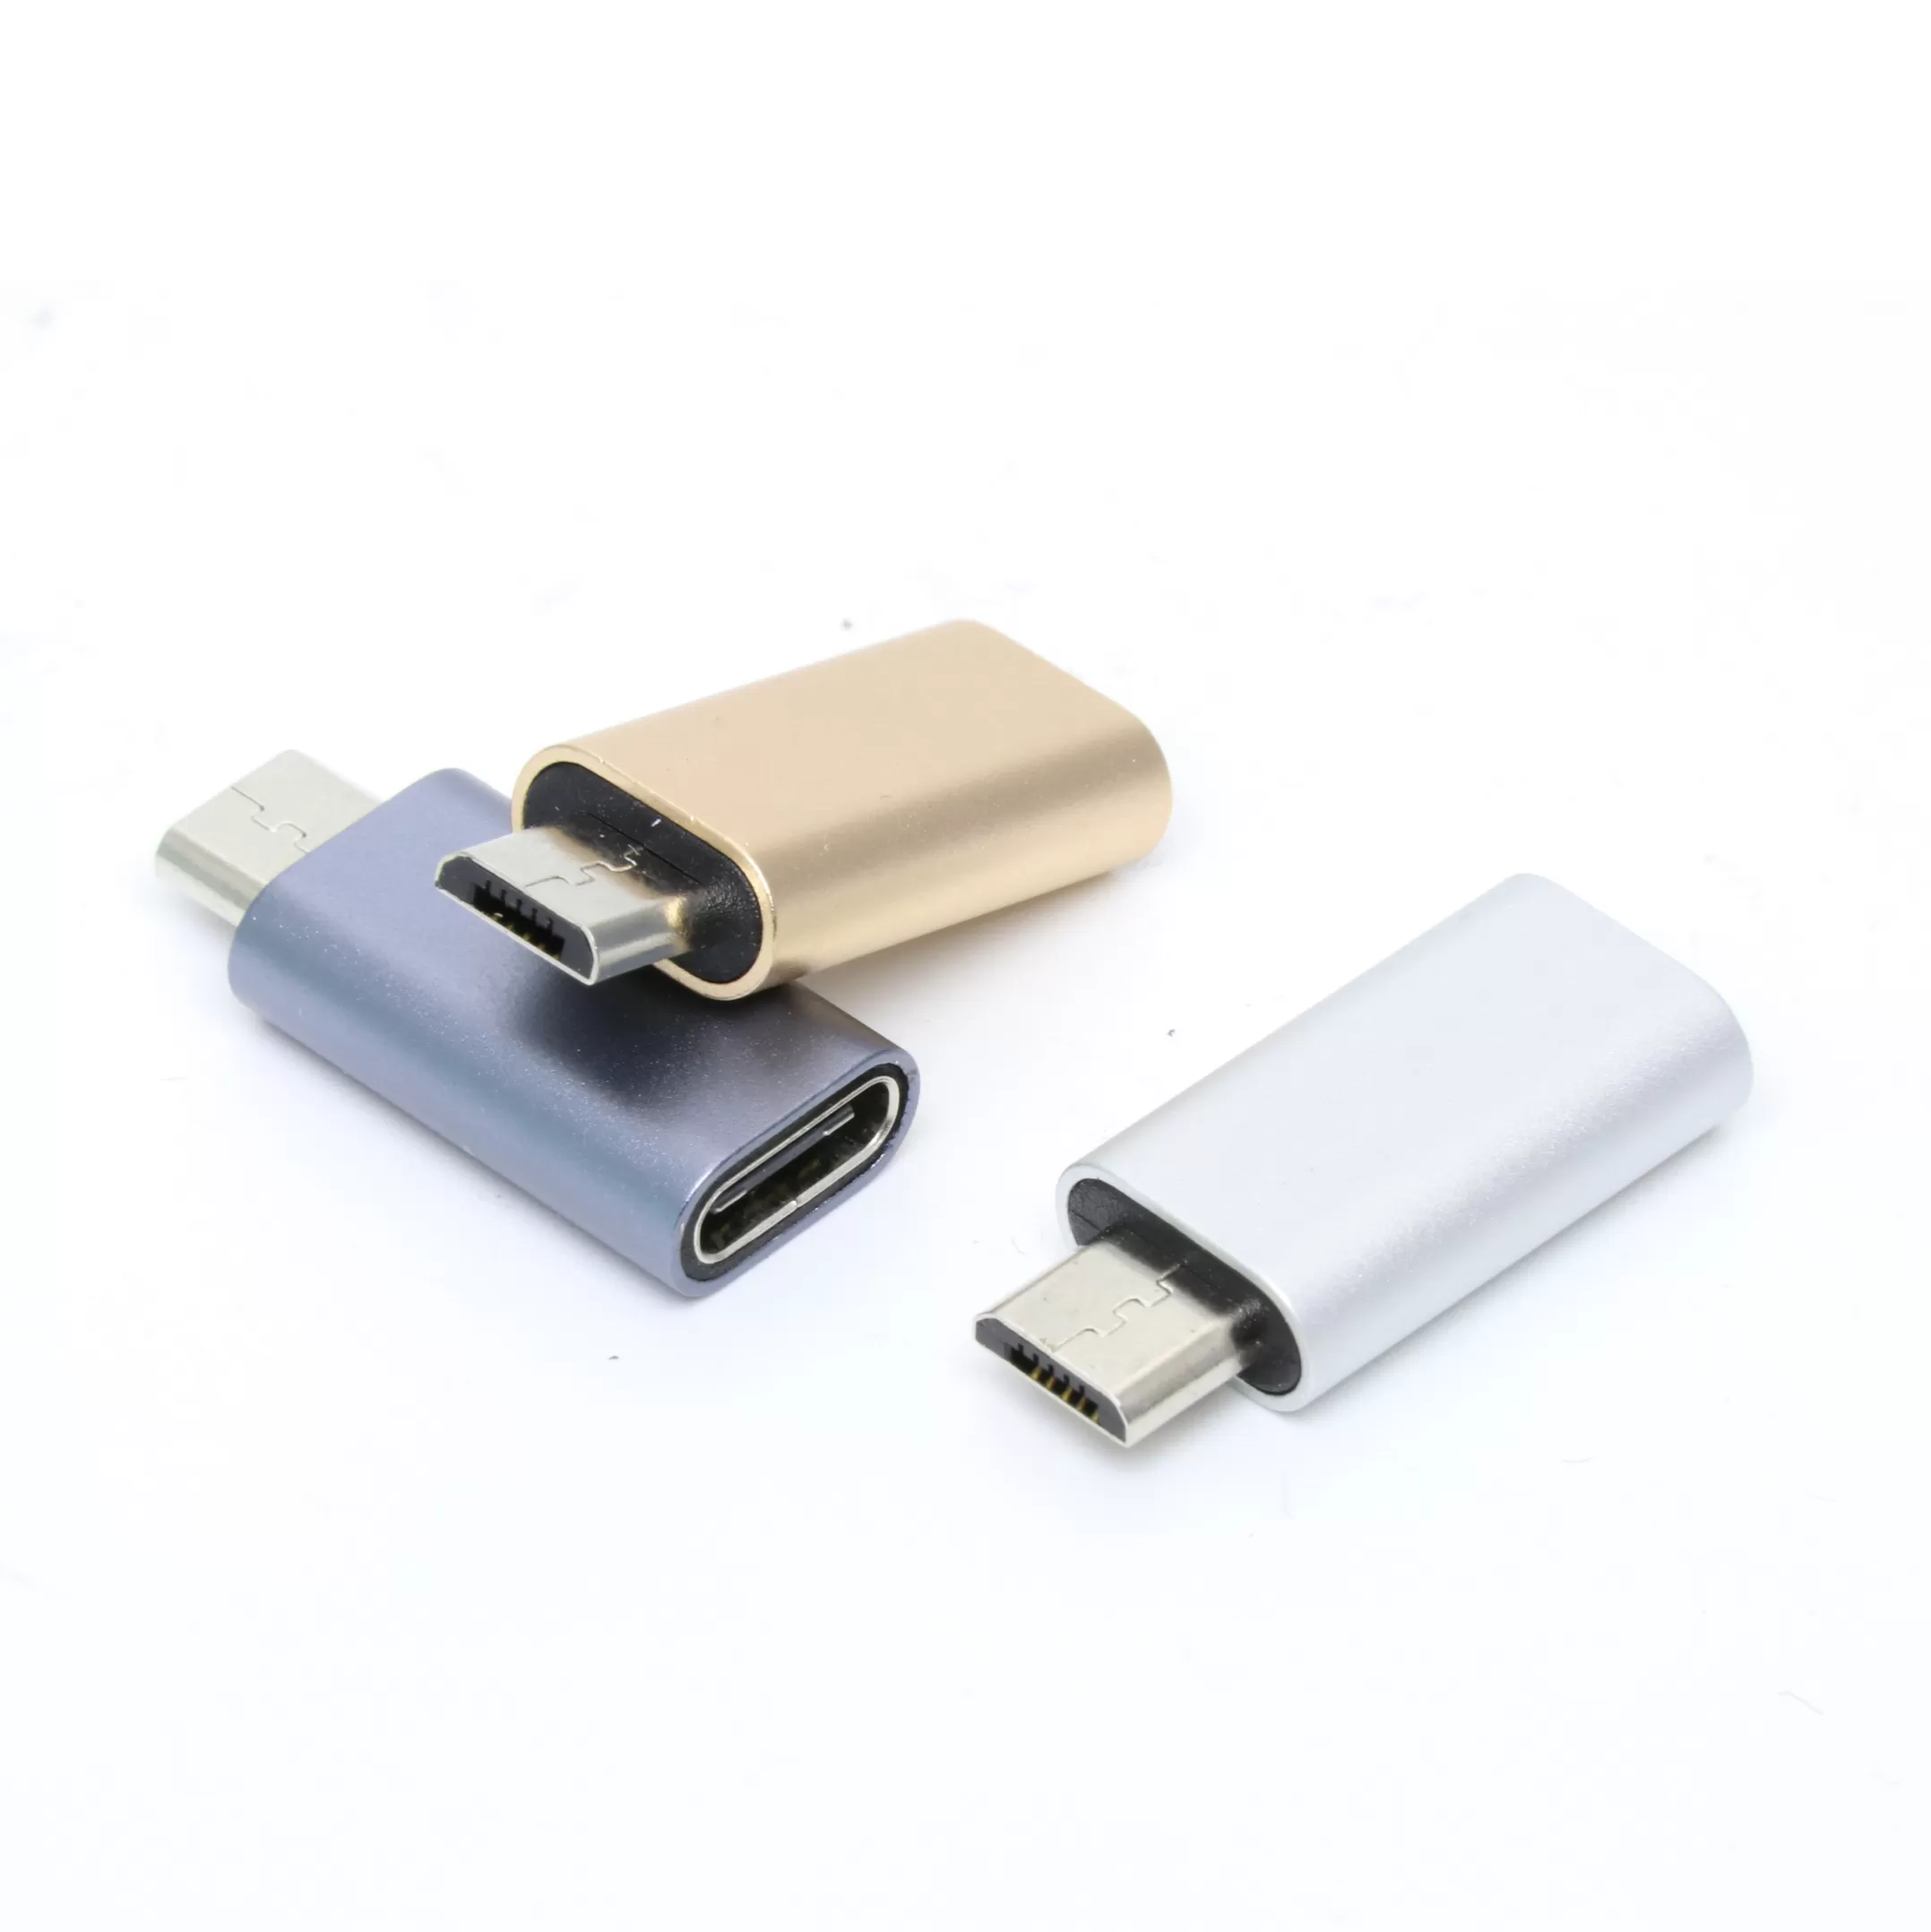 USB C to Micro USB Adapter